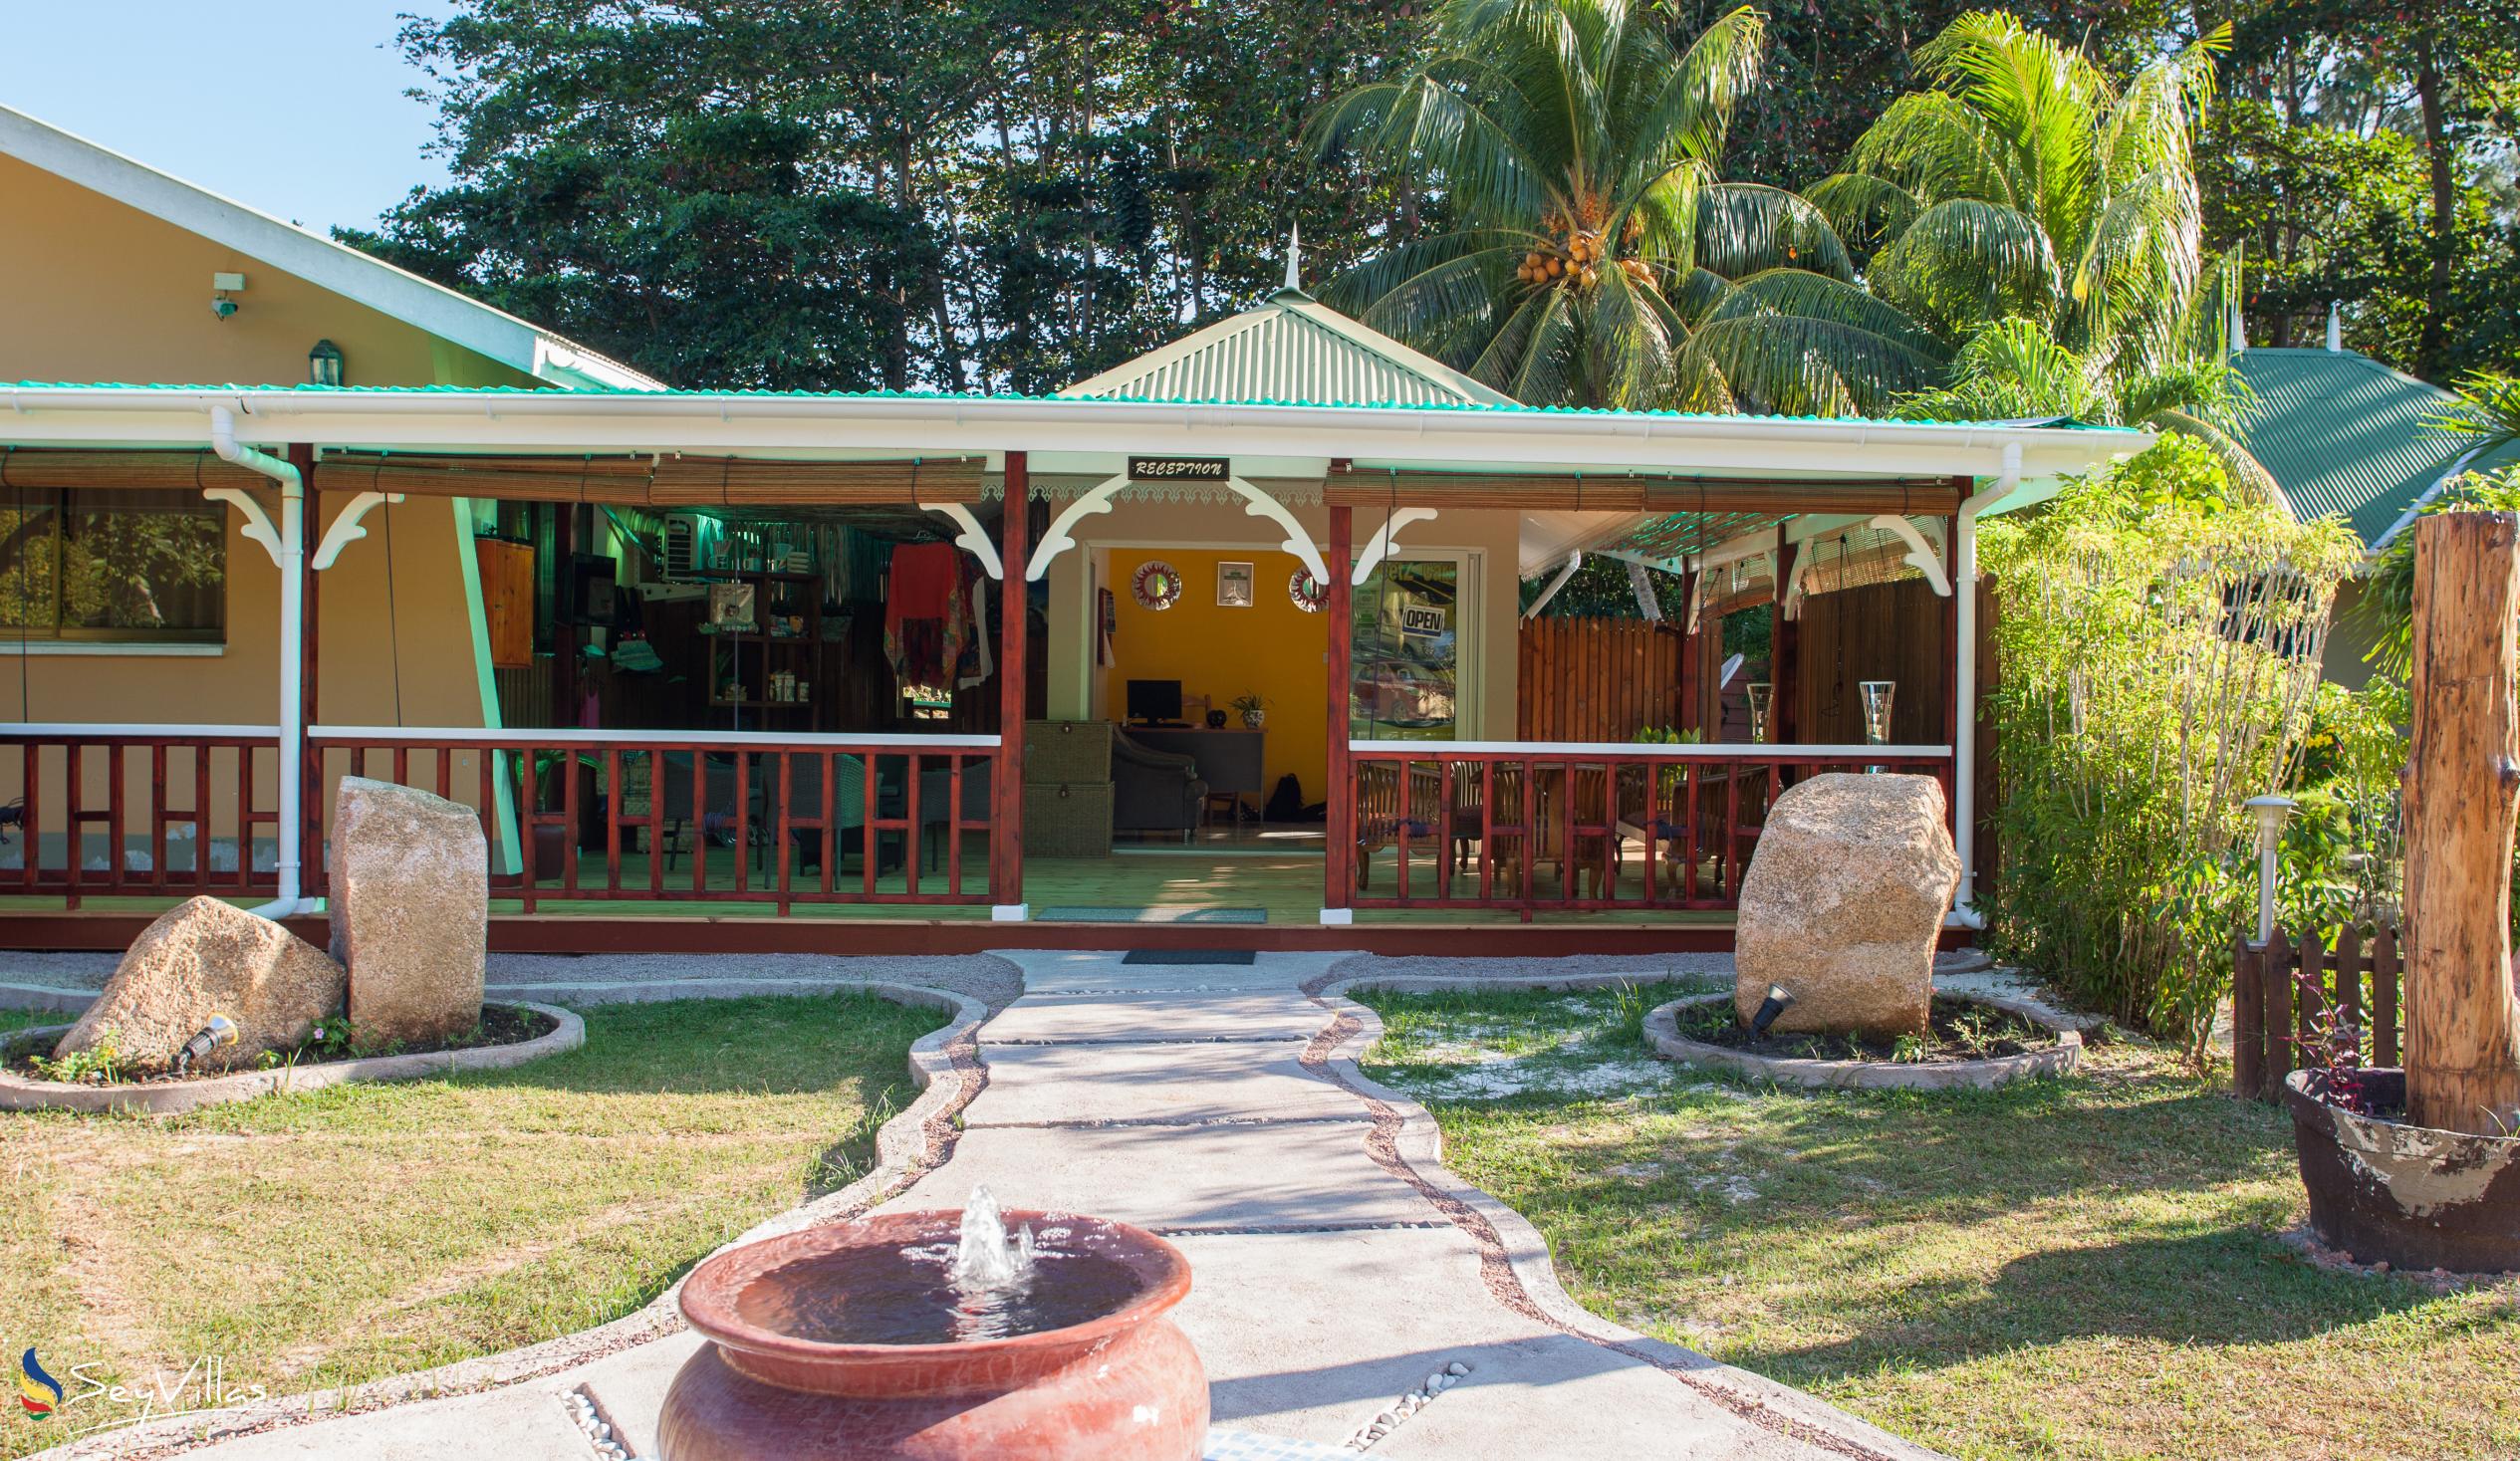 Foto 15: Casa de Leela - Aussenbereich - La Digue (Seychellen)